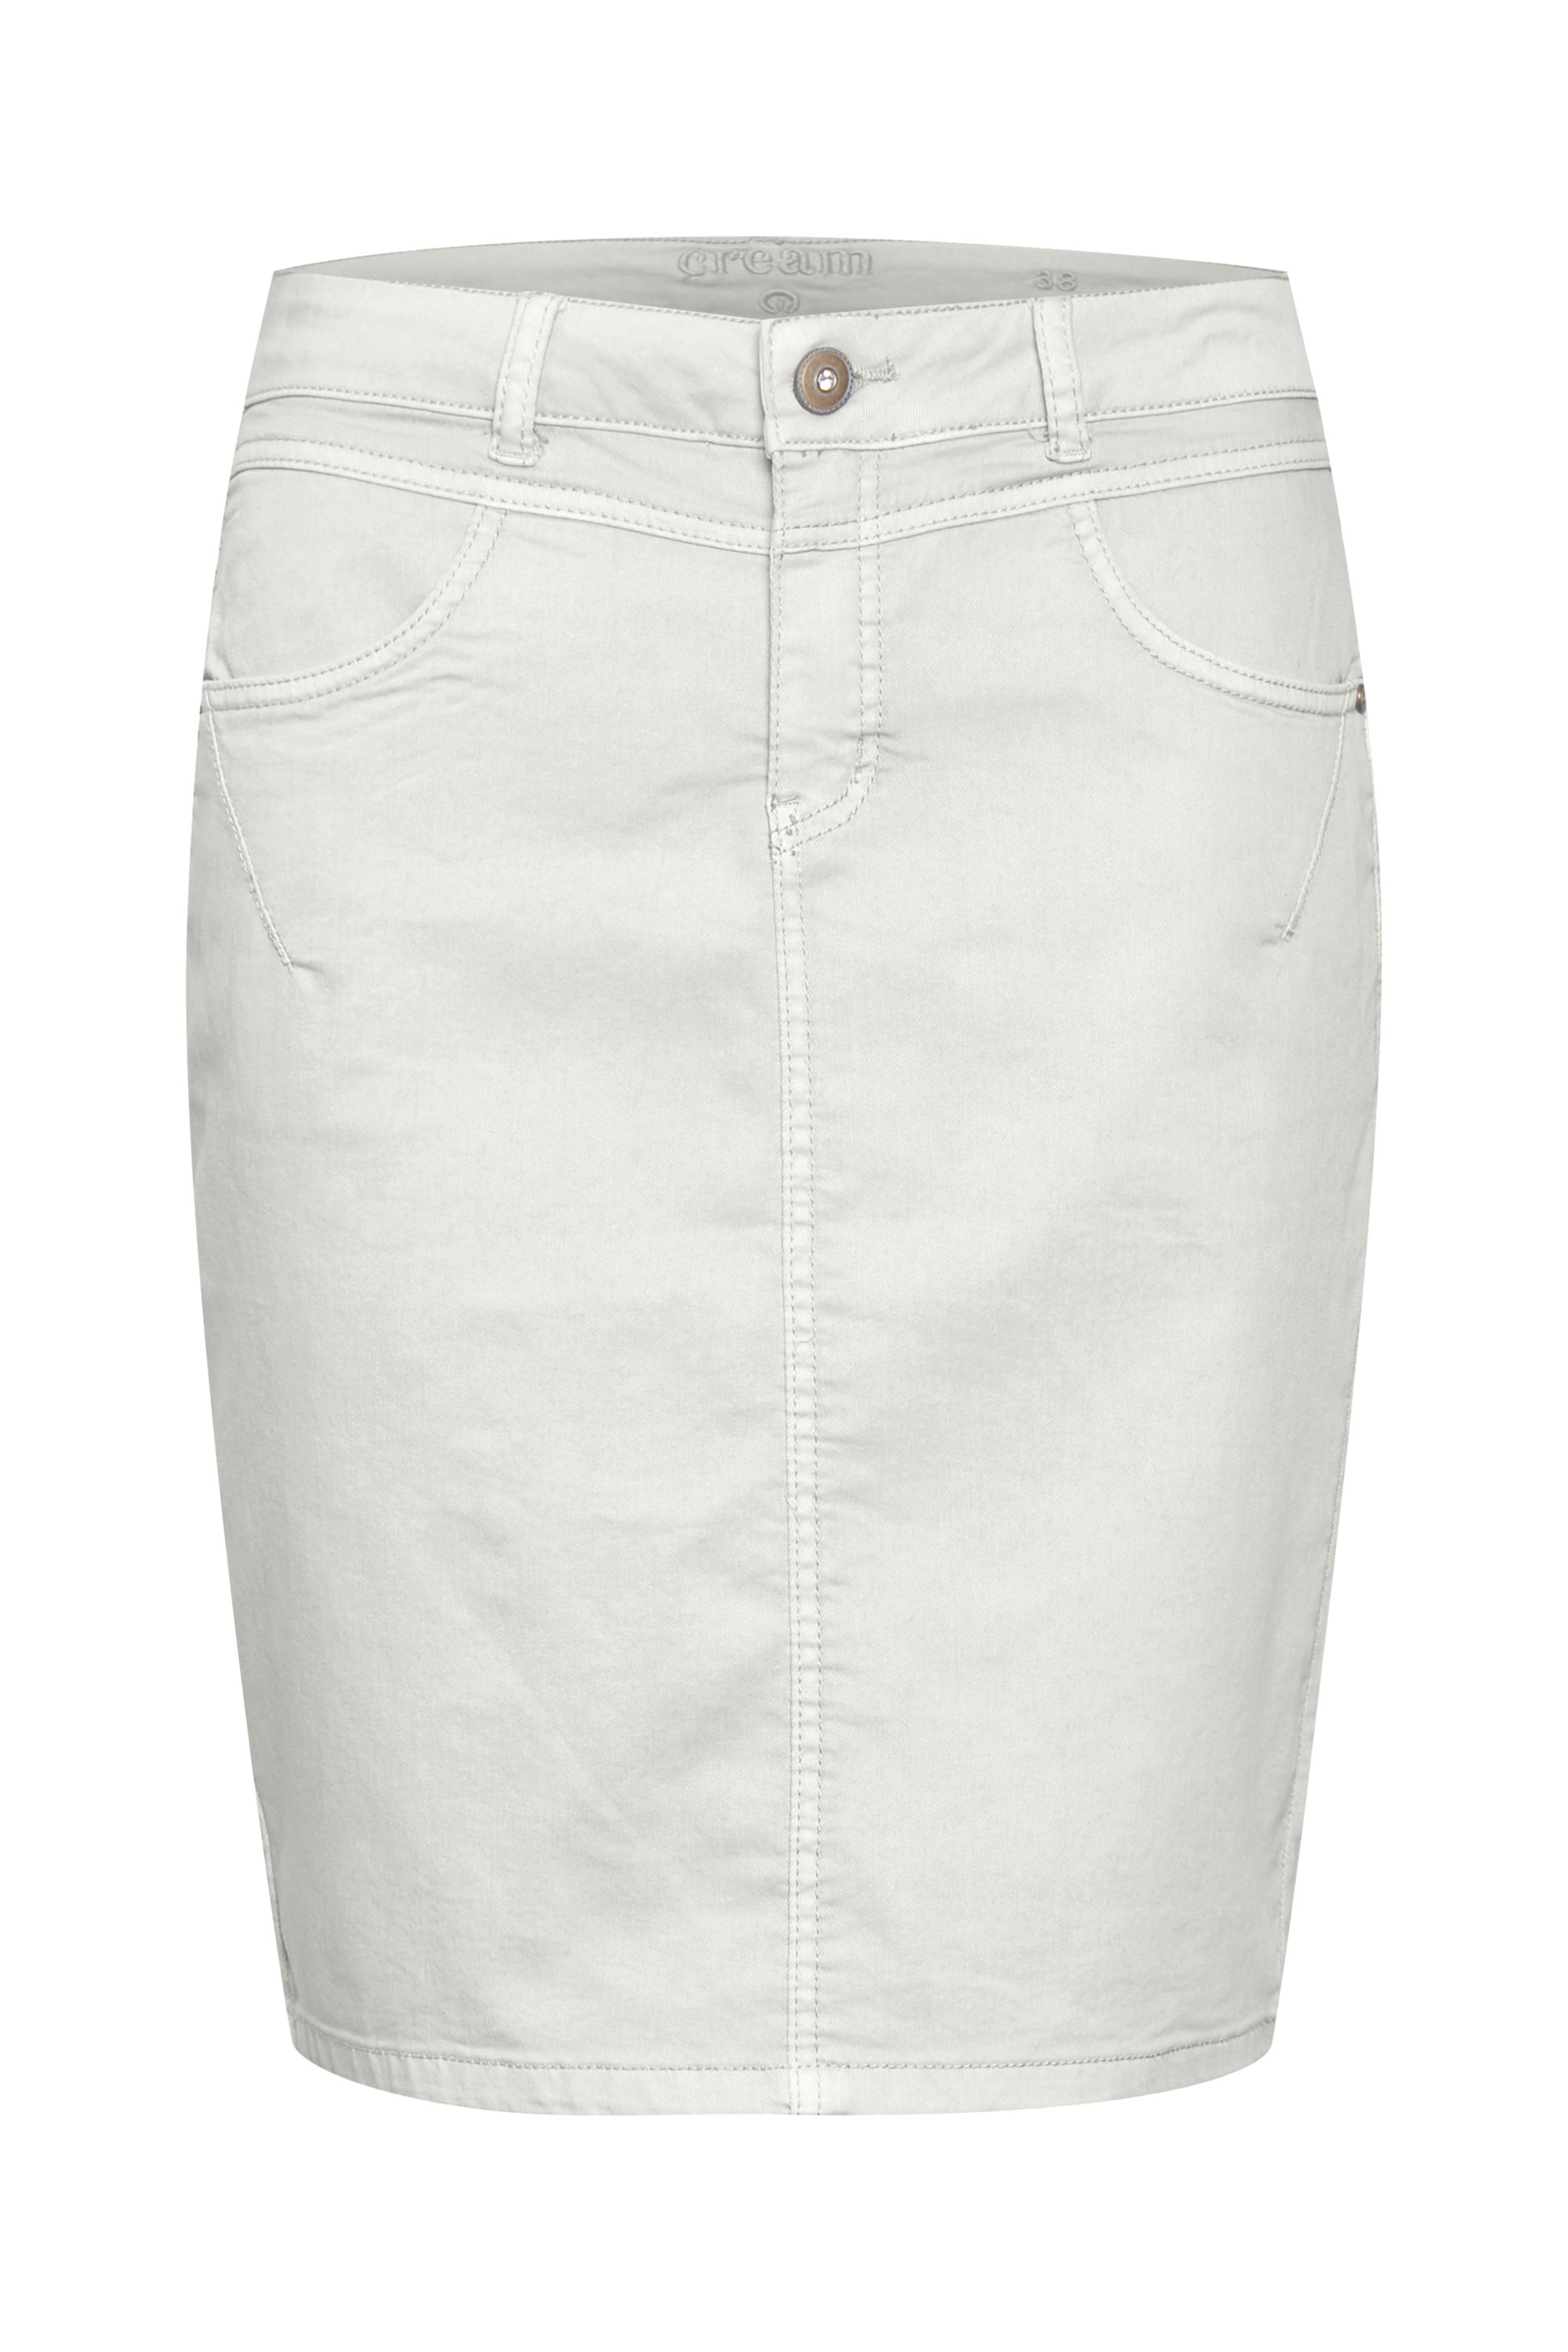 forvisning mønt erstatte Cream Amalie nederdel, stram hvid